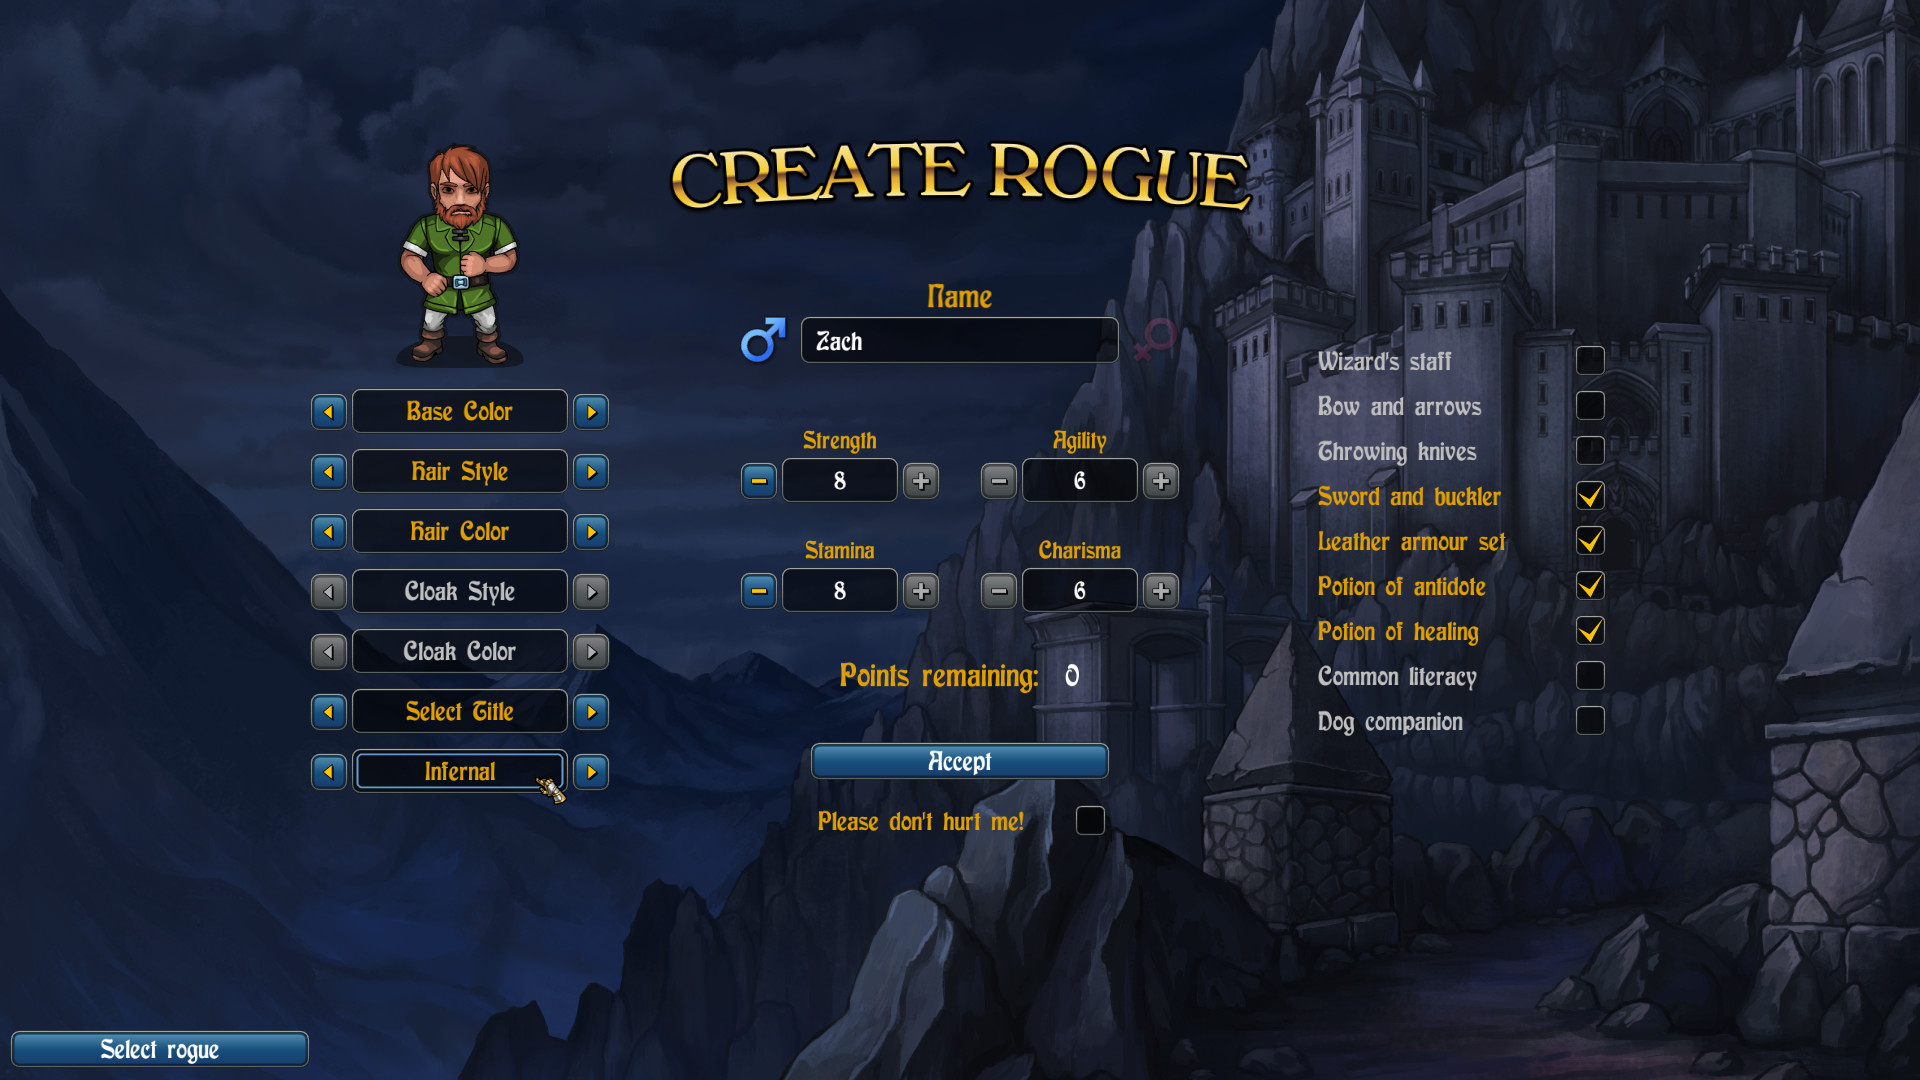 Rogue's Tale - Bloodlines DLC Steam CD Key